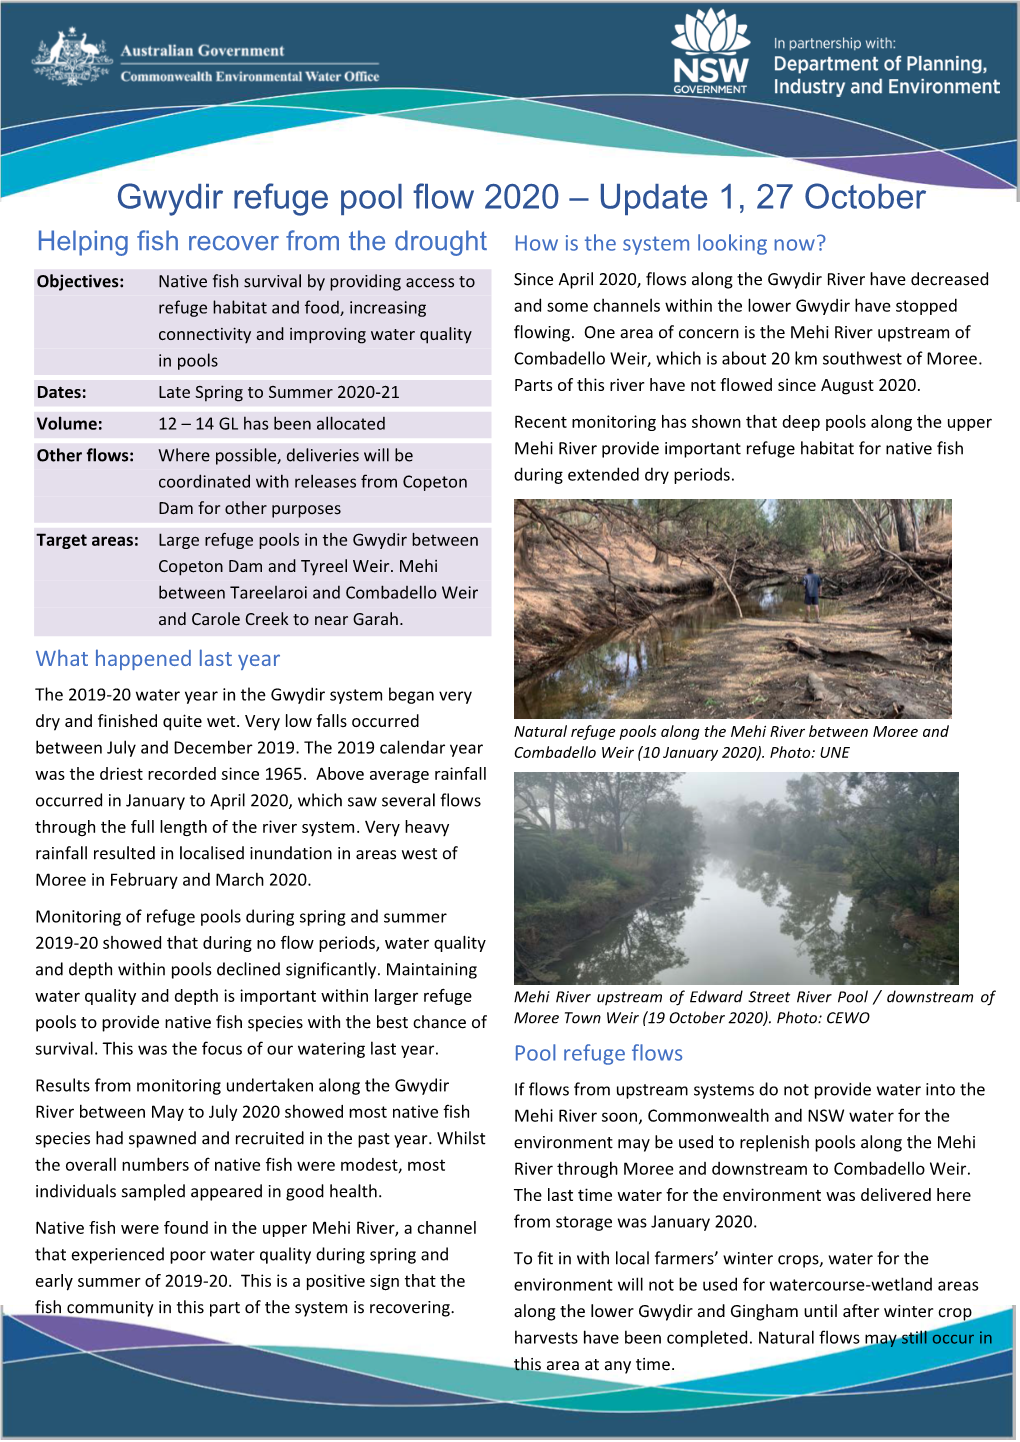 Gwydir Refuge Pool Flow 2020 – Update 1, 27 October